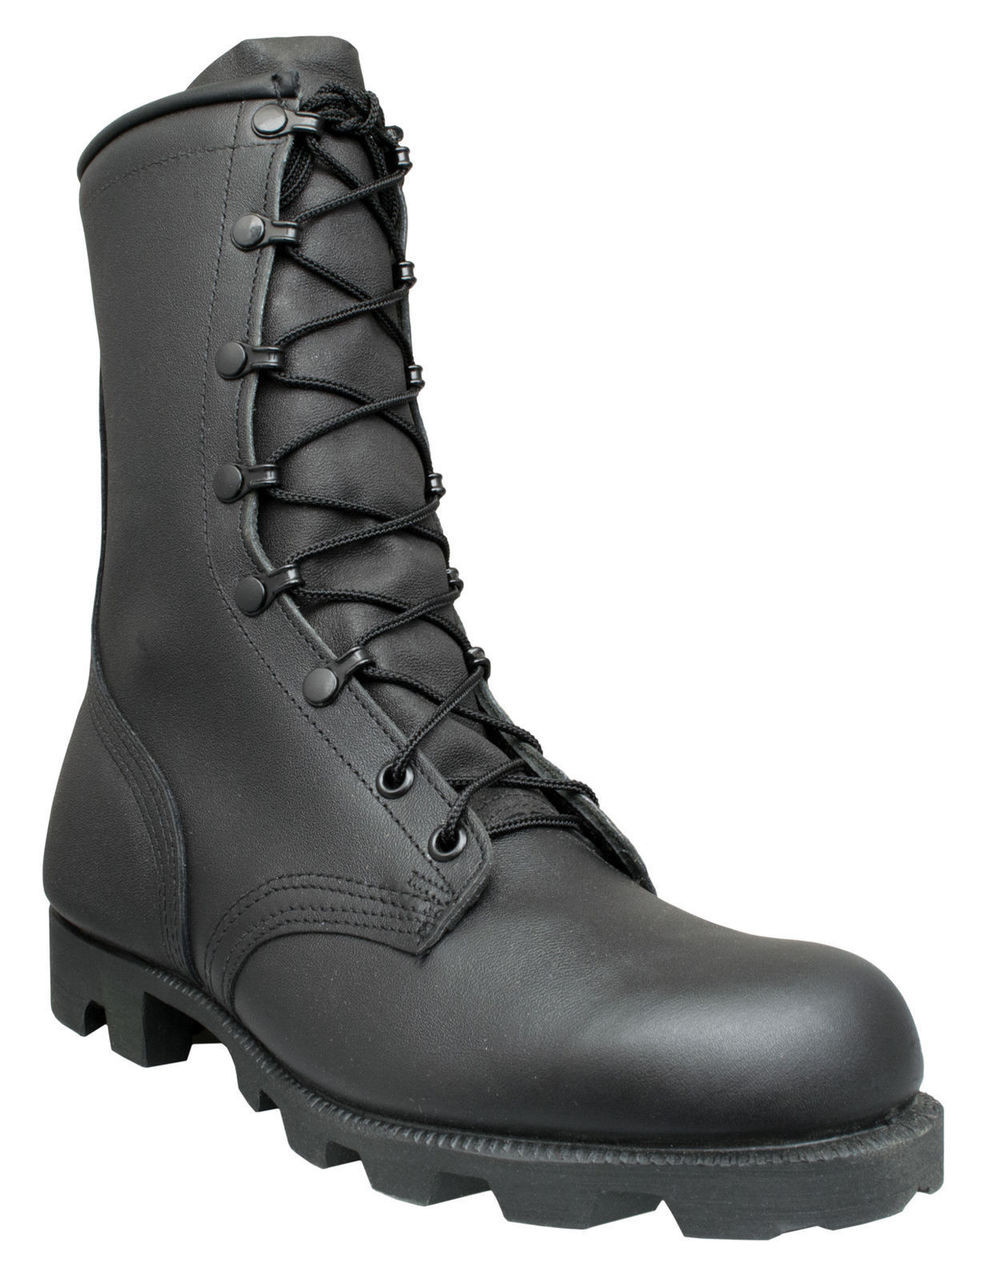 black military jungle boots